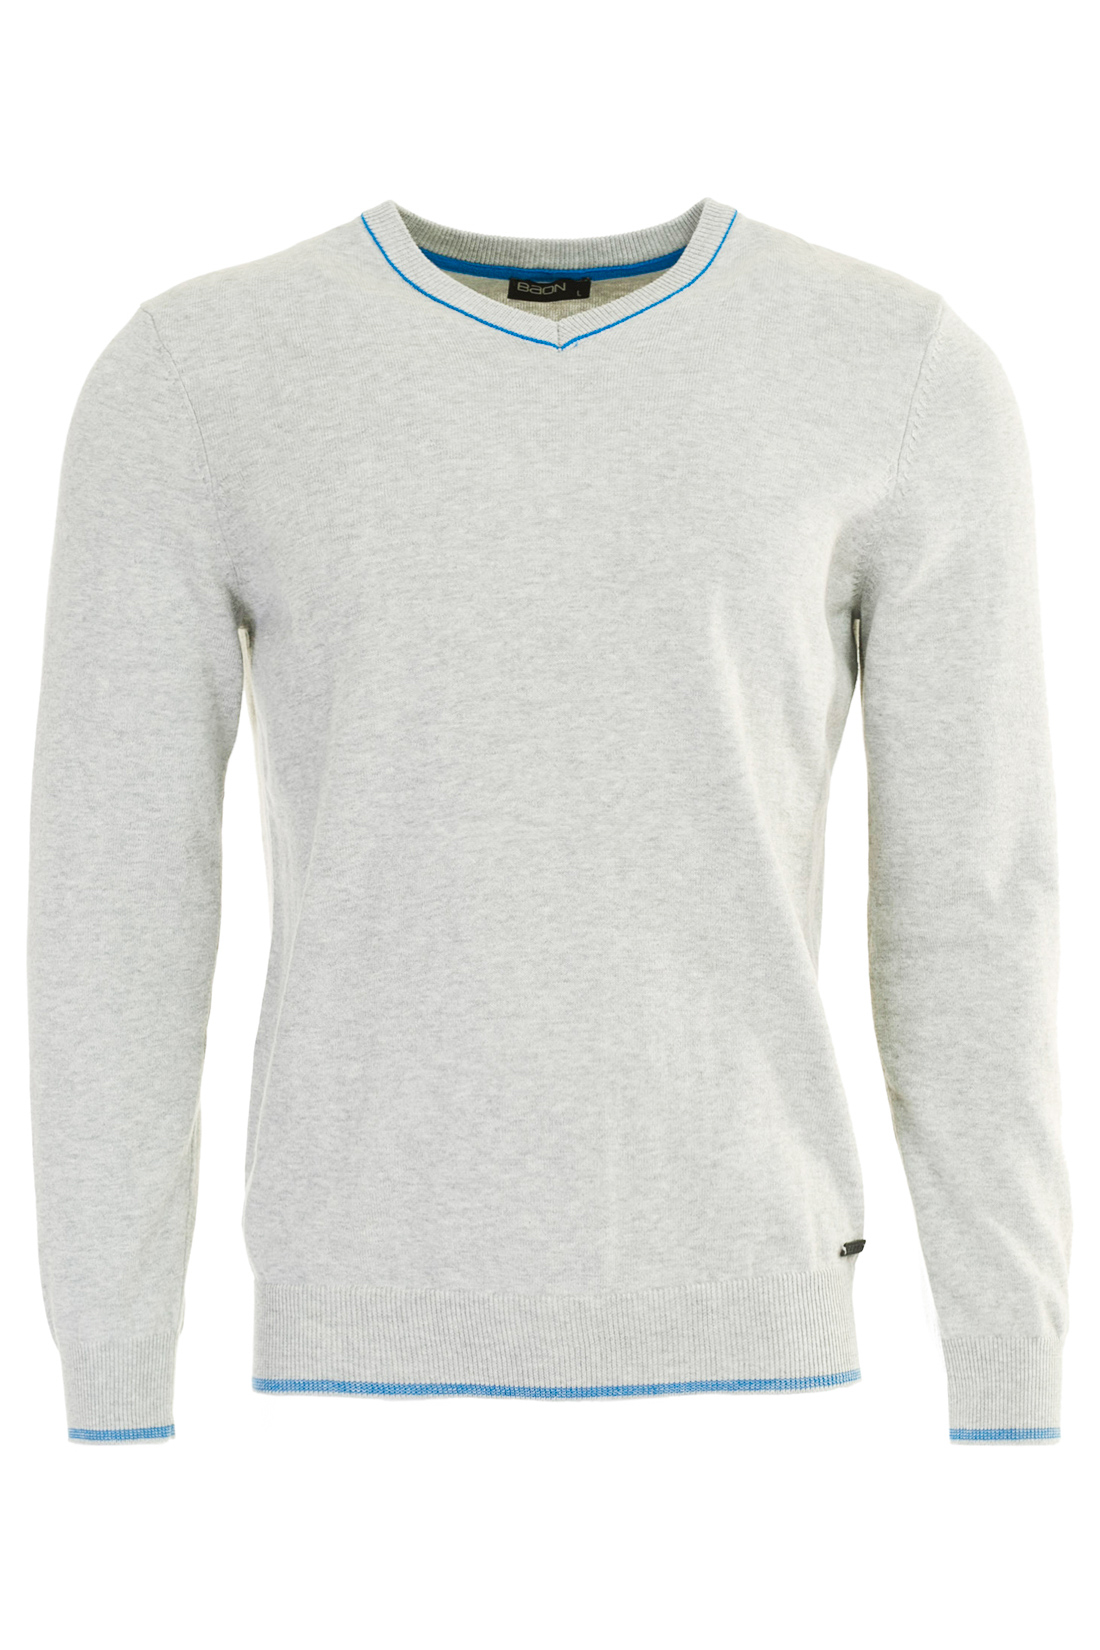 Пуловер с окантовкой (арт. baon B637011), размер L, цвет silver melange#серый Пуловер с окантовкой (арт. baon B637011) - фото 3